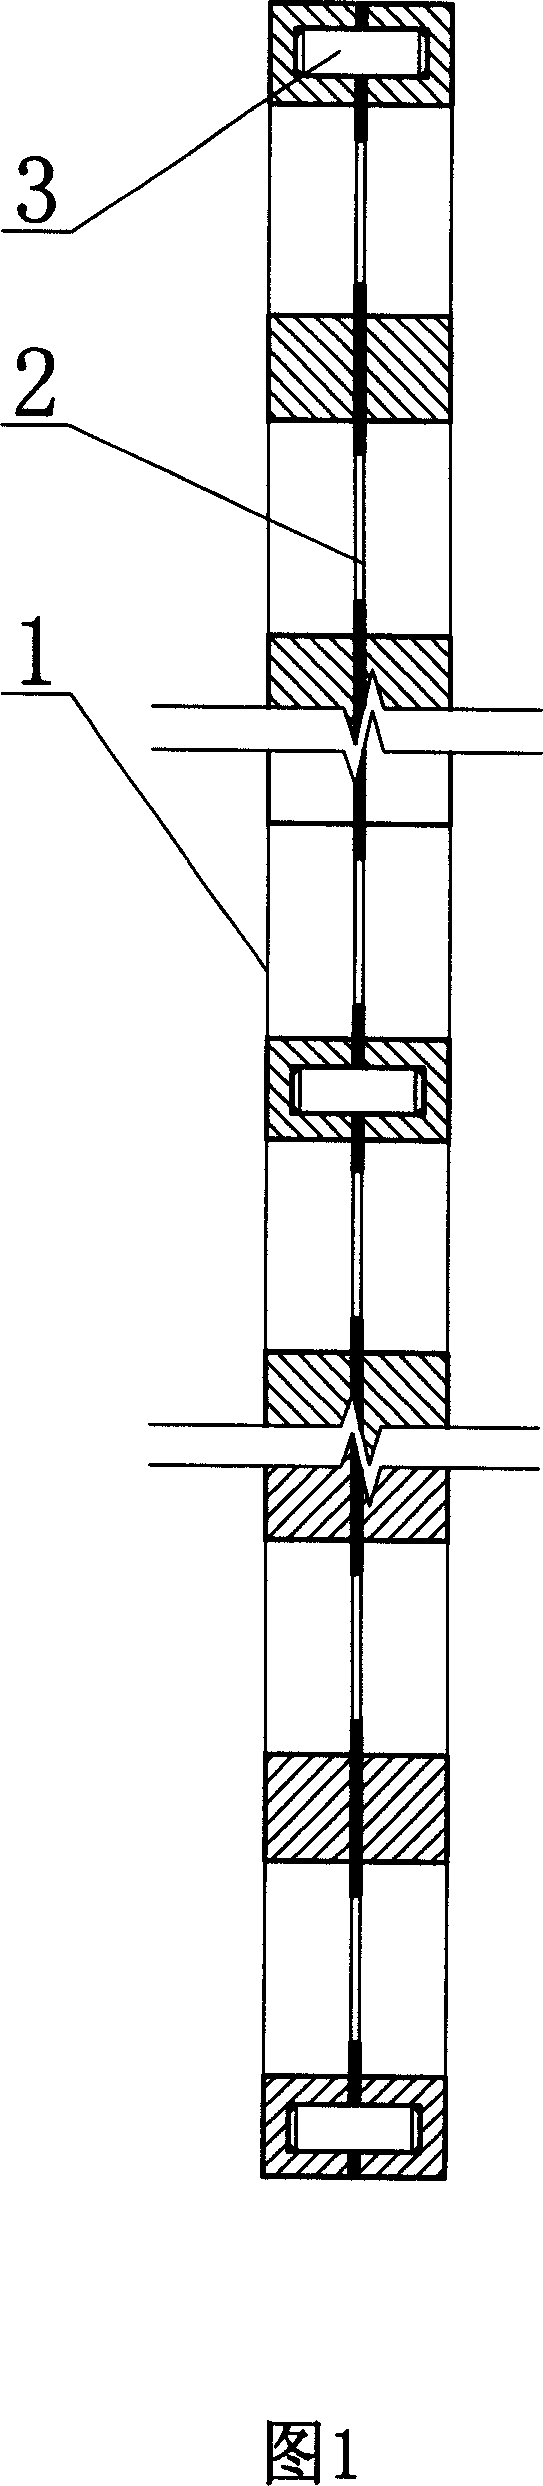 Composite twistless compound pendulus rod